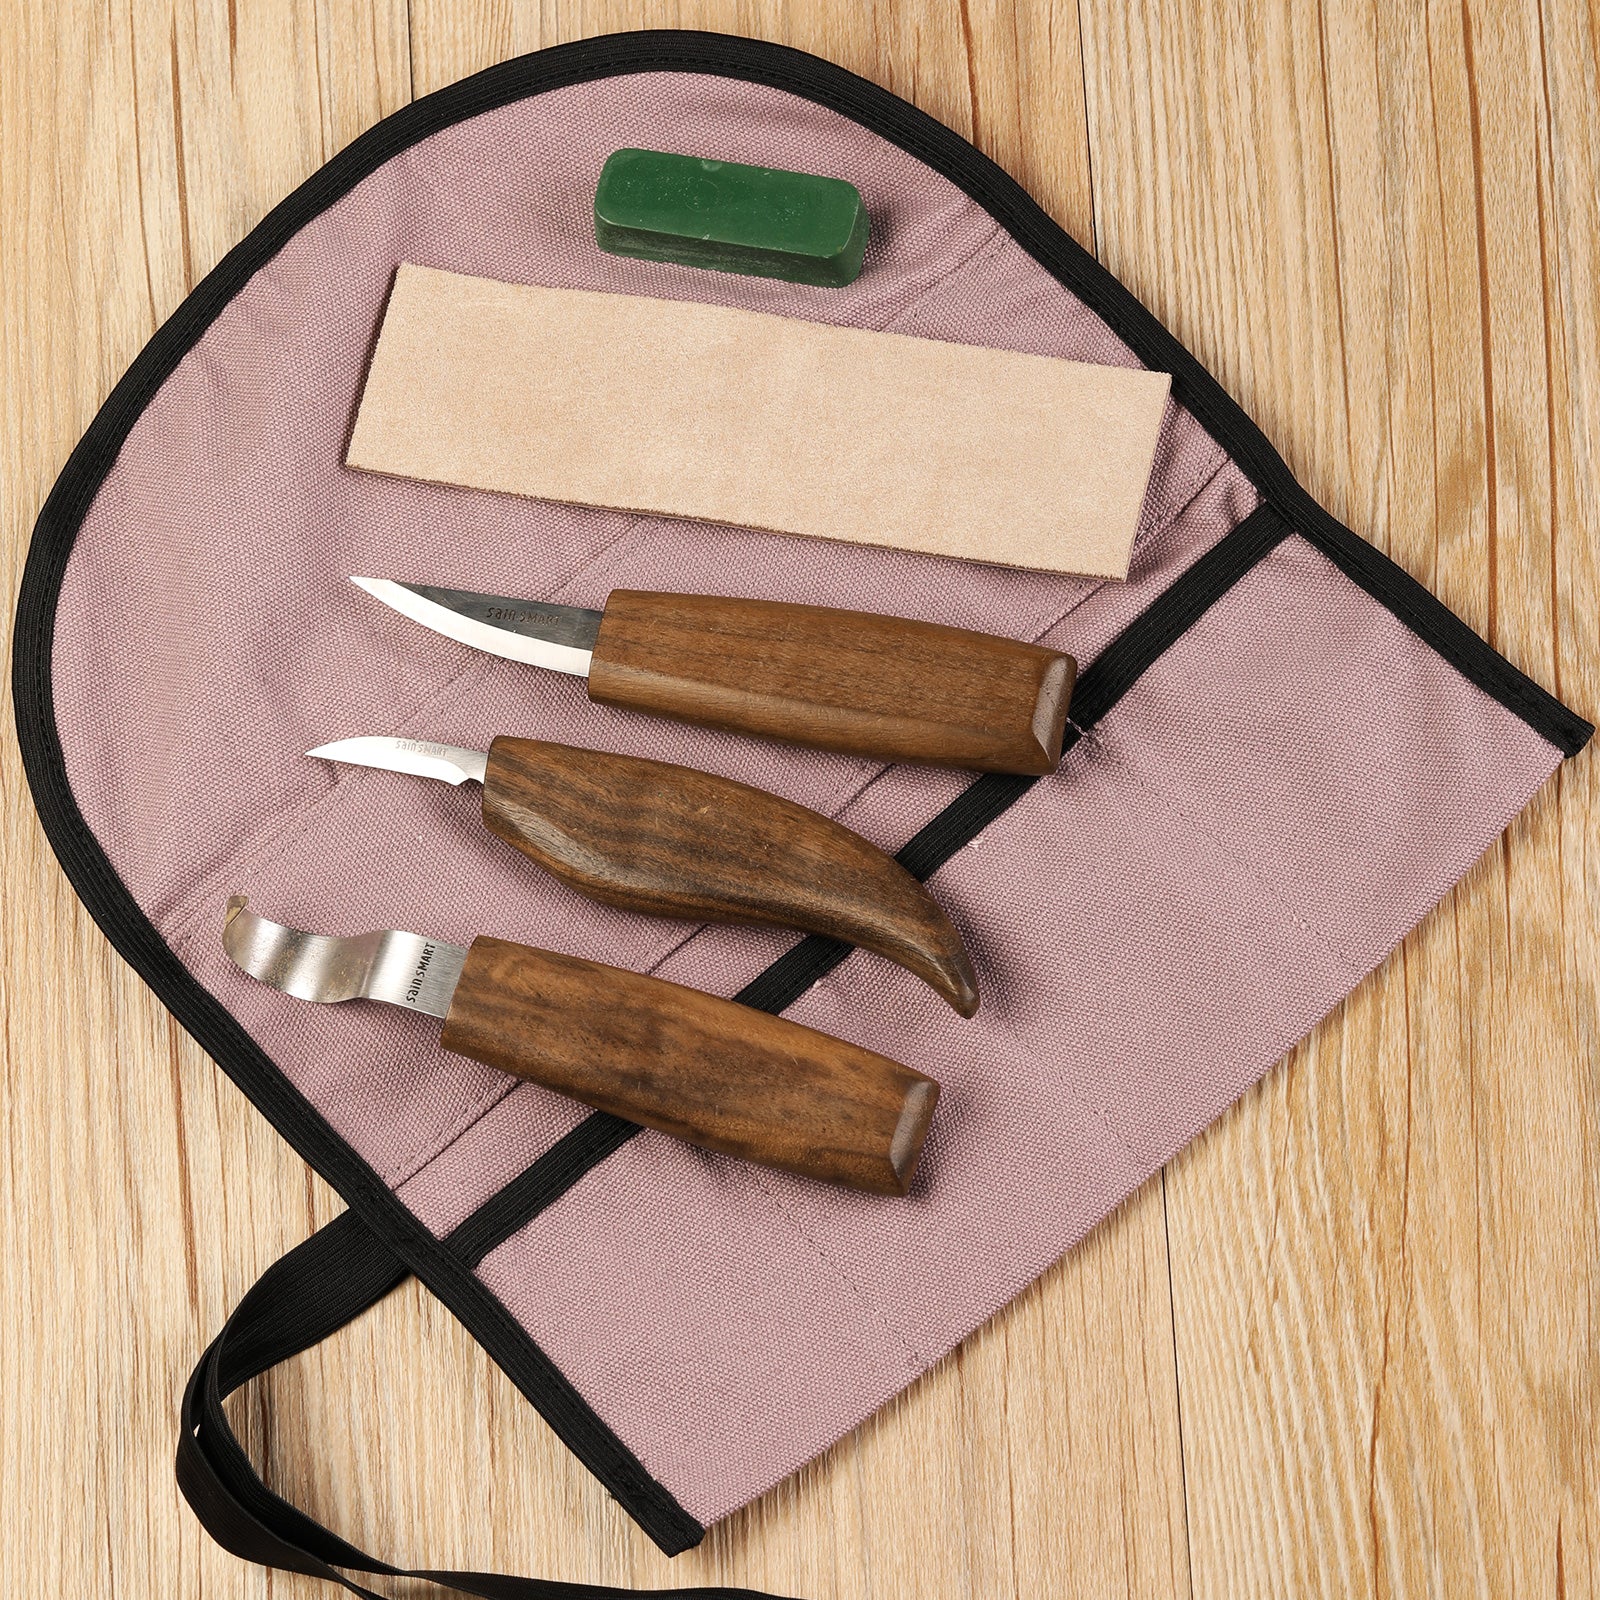 SainSmart Wood Carving Tools, 20 in 1 Wood Knife Deluxe Set Includes Hook Carving Knife, Whittling Knife, Detail Knife, and SK2 Carbon Steel Carving